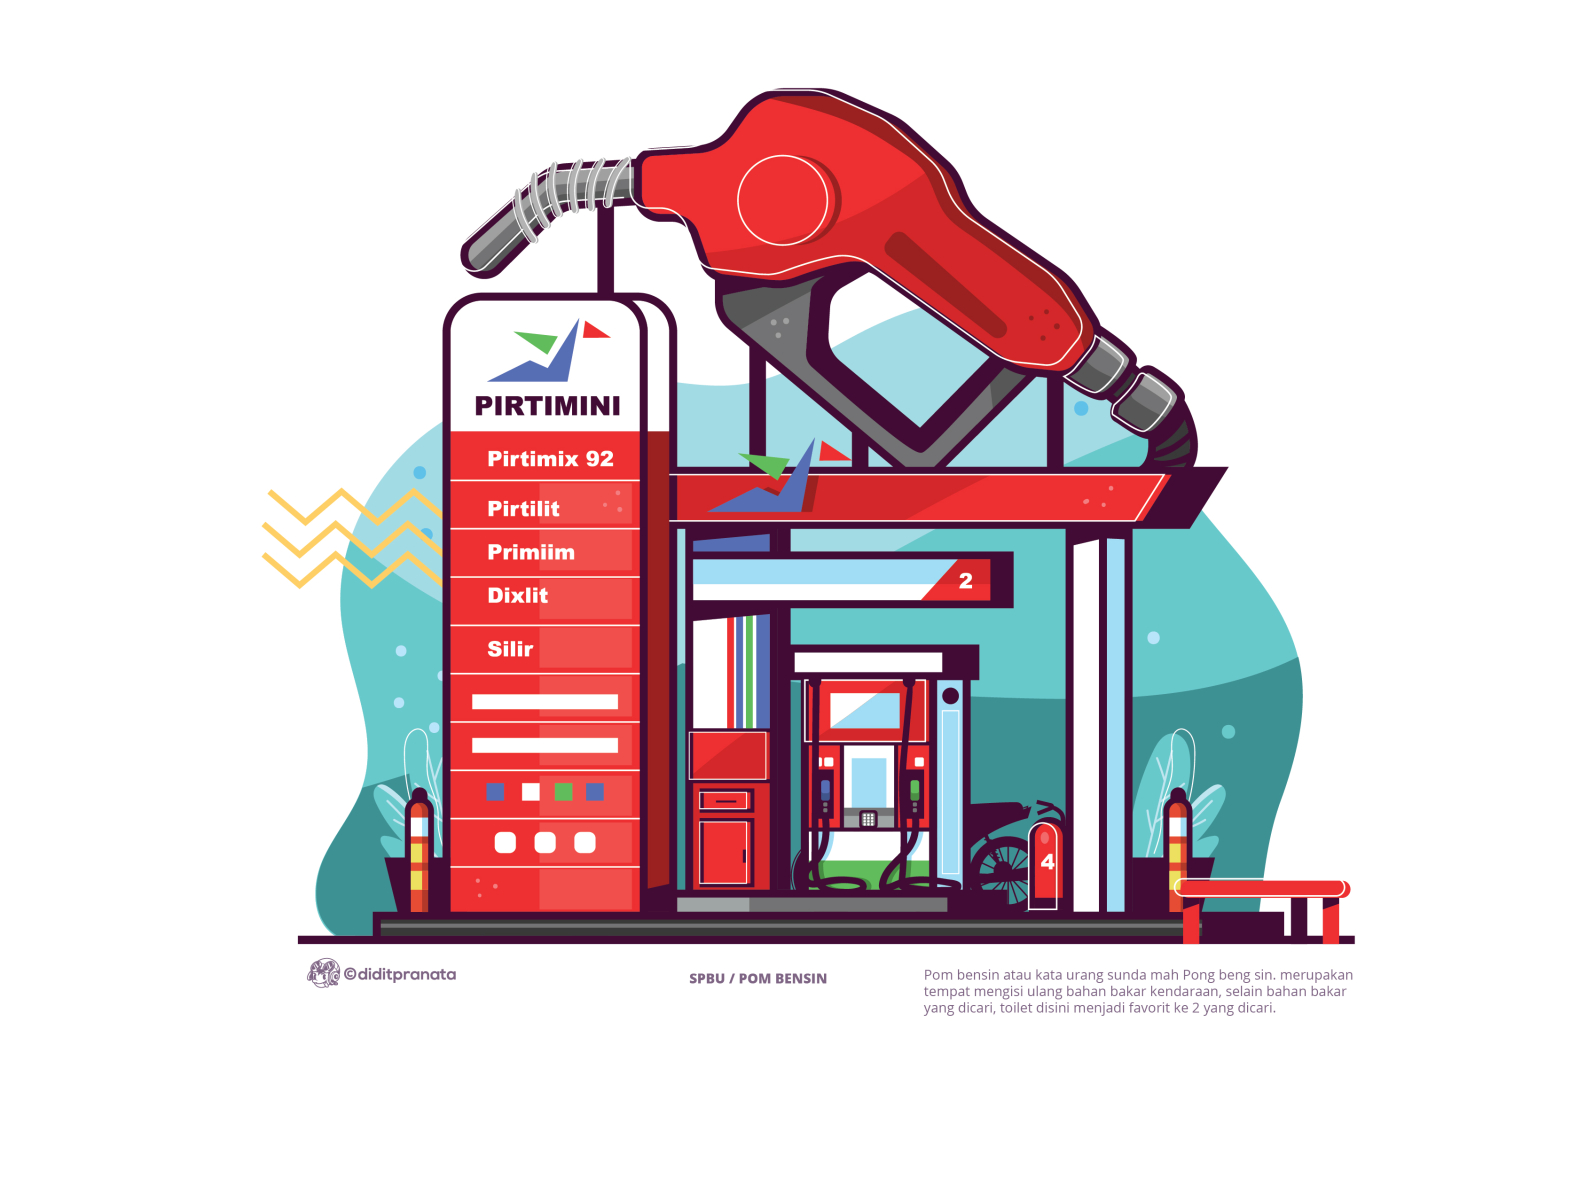 Pom bensin (gas station) by Aditya Pranata on Dribbble